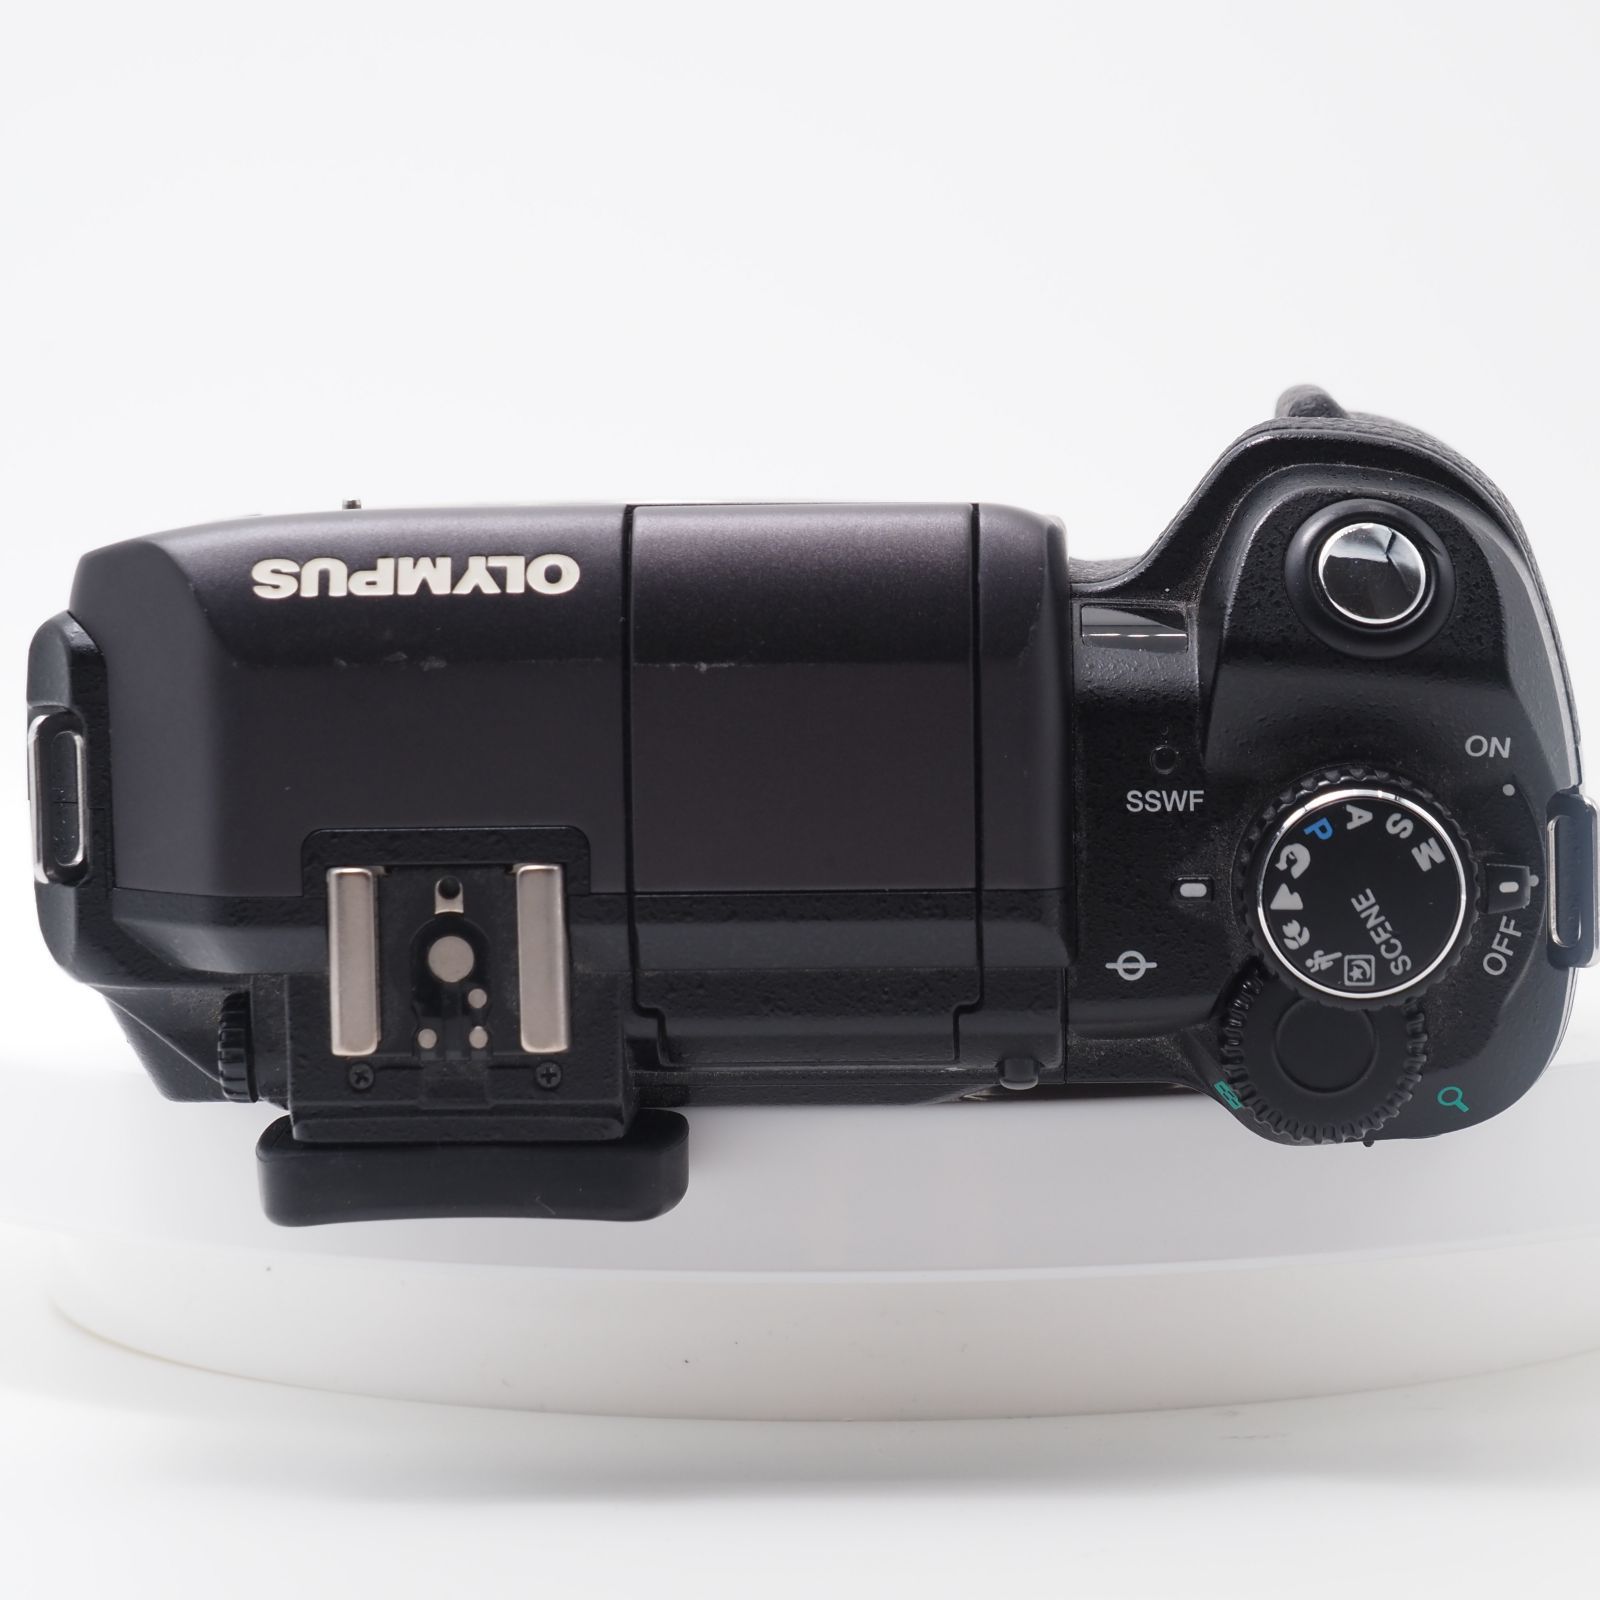 OLYMPUS デジタル一眼レフカメラ E-300 ボディ単体 :B0006VD4UG